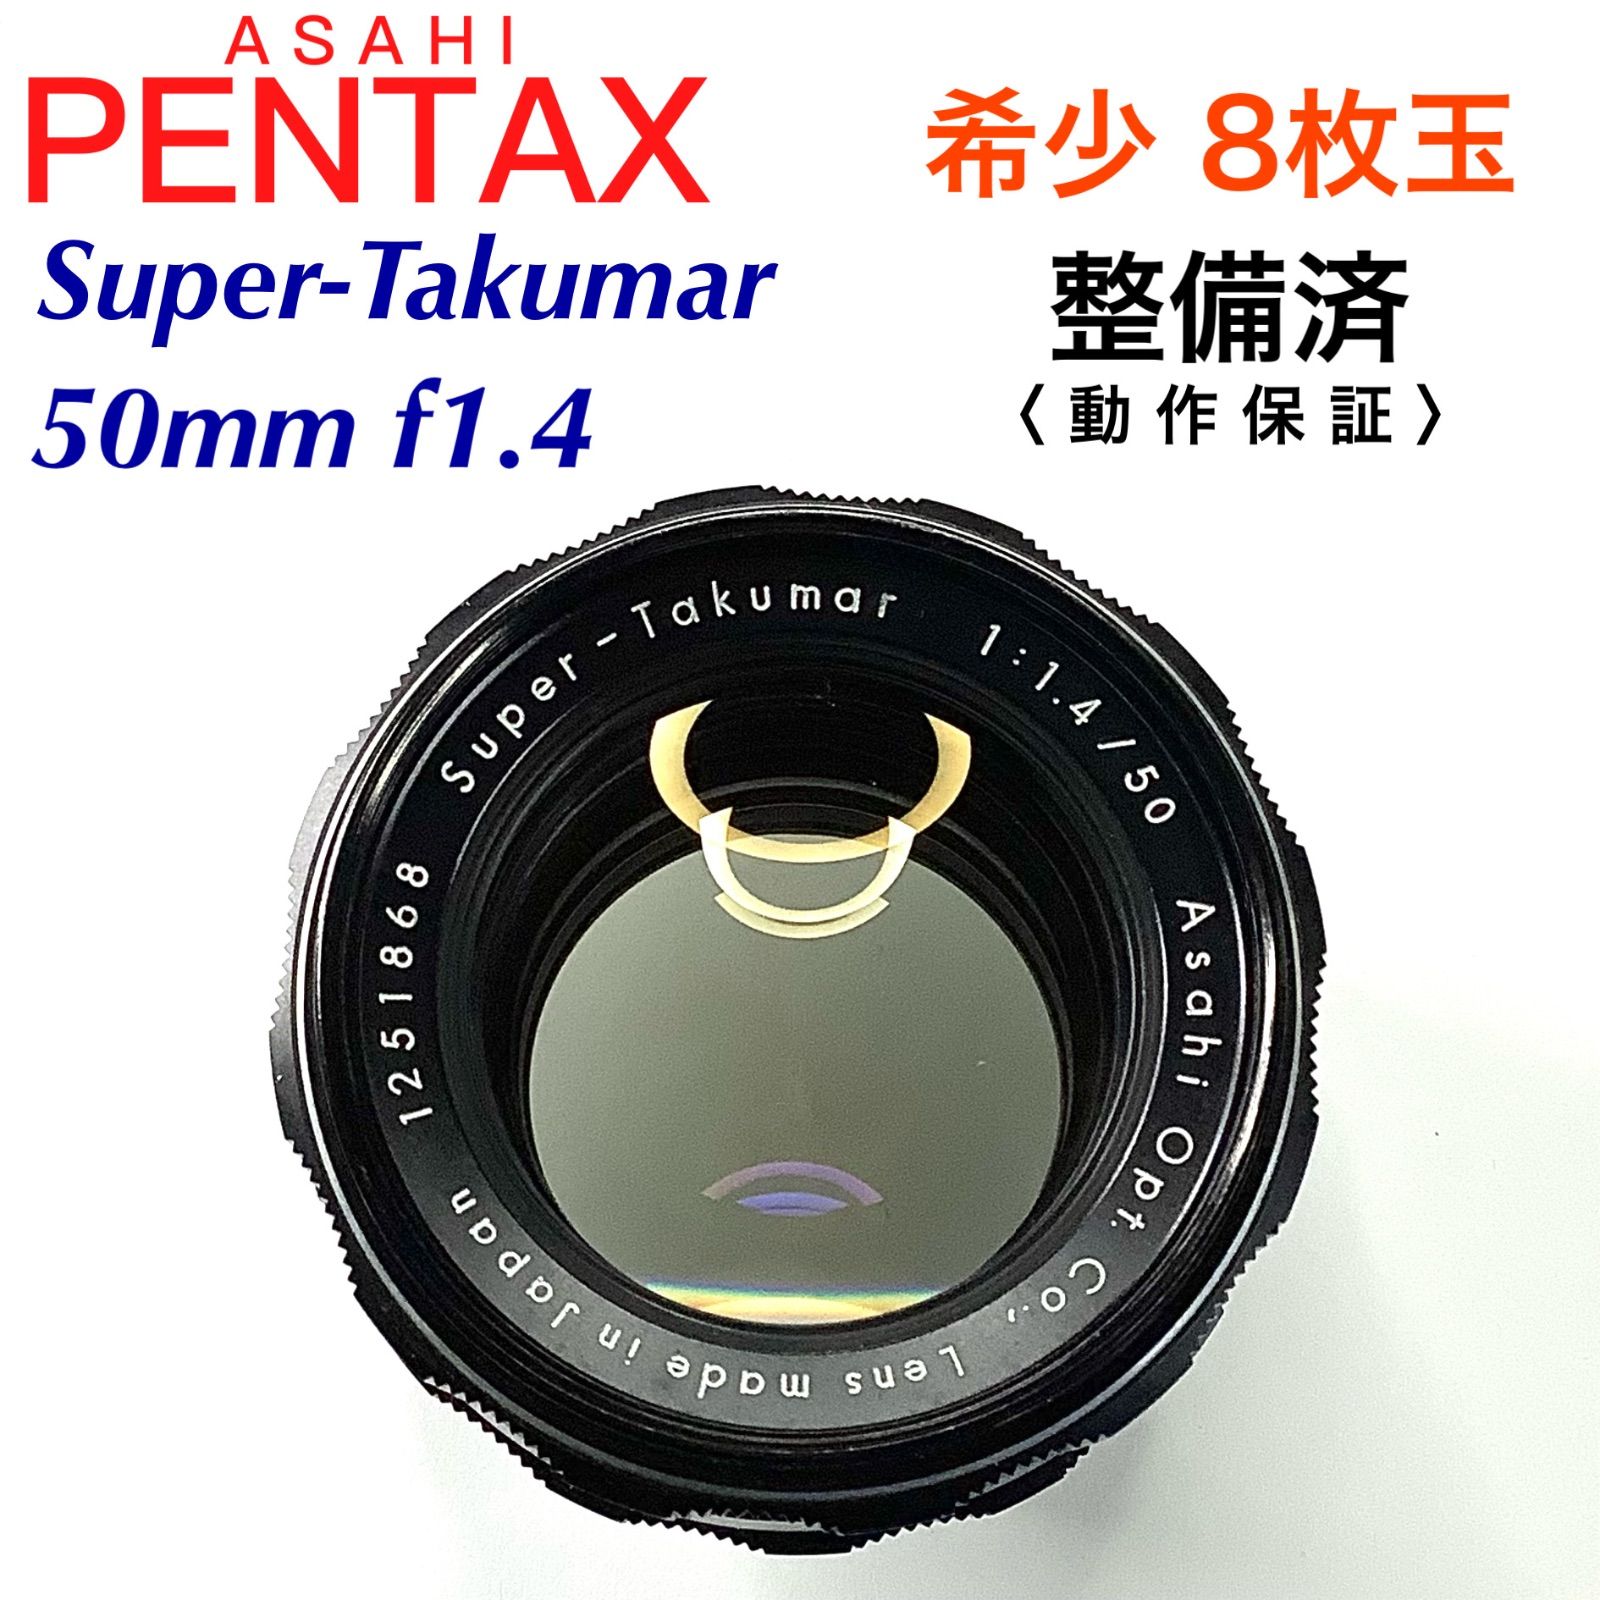 8枚玉 Super-Takumar 50mm F1.4 単焦点 pentax